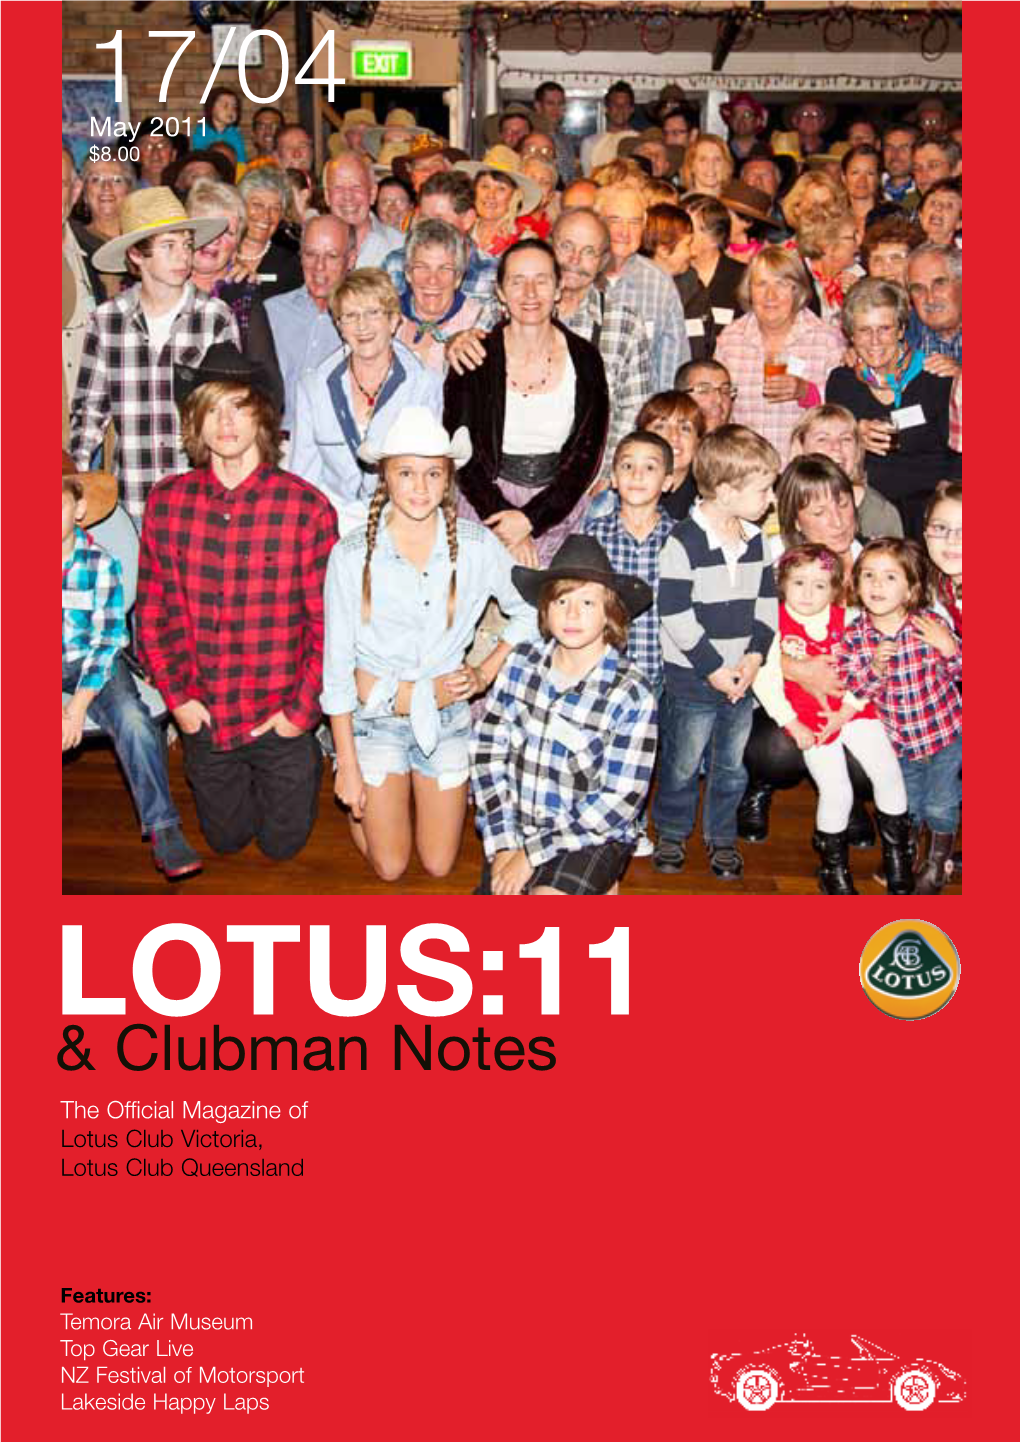 LOTUS:11 & Clubman Notes the Official Magazine of Lotus Club Victoria, Lotus Club Queensland